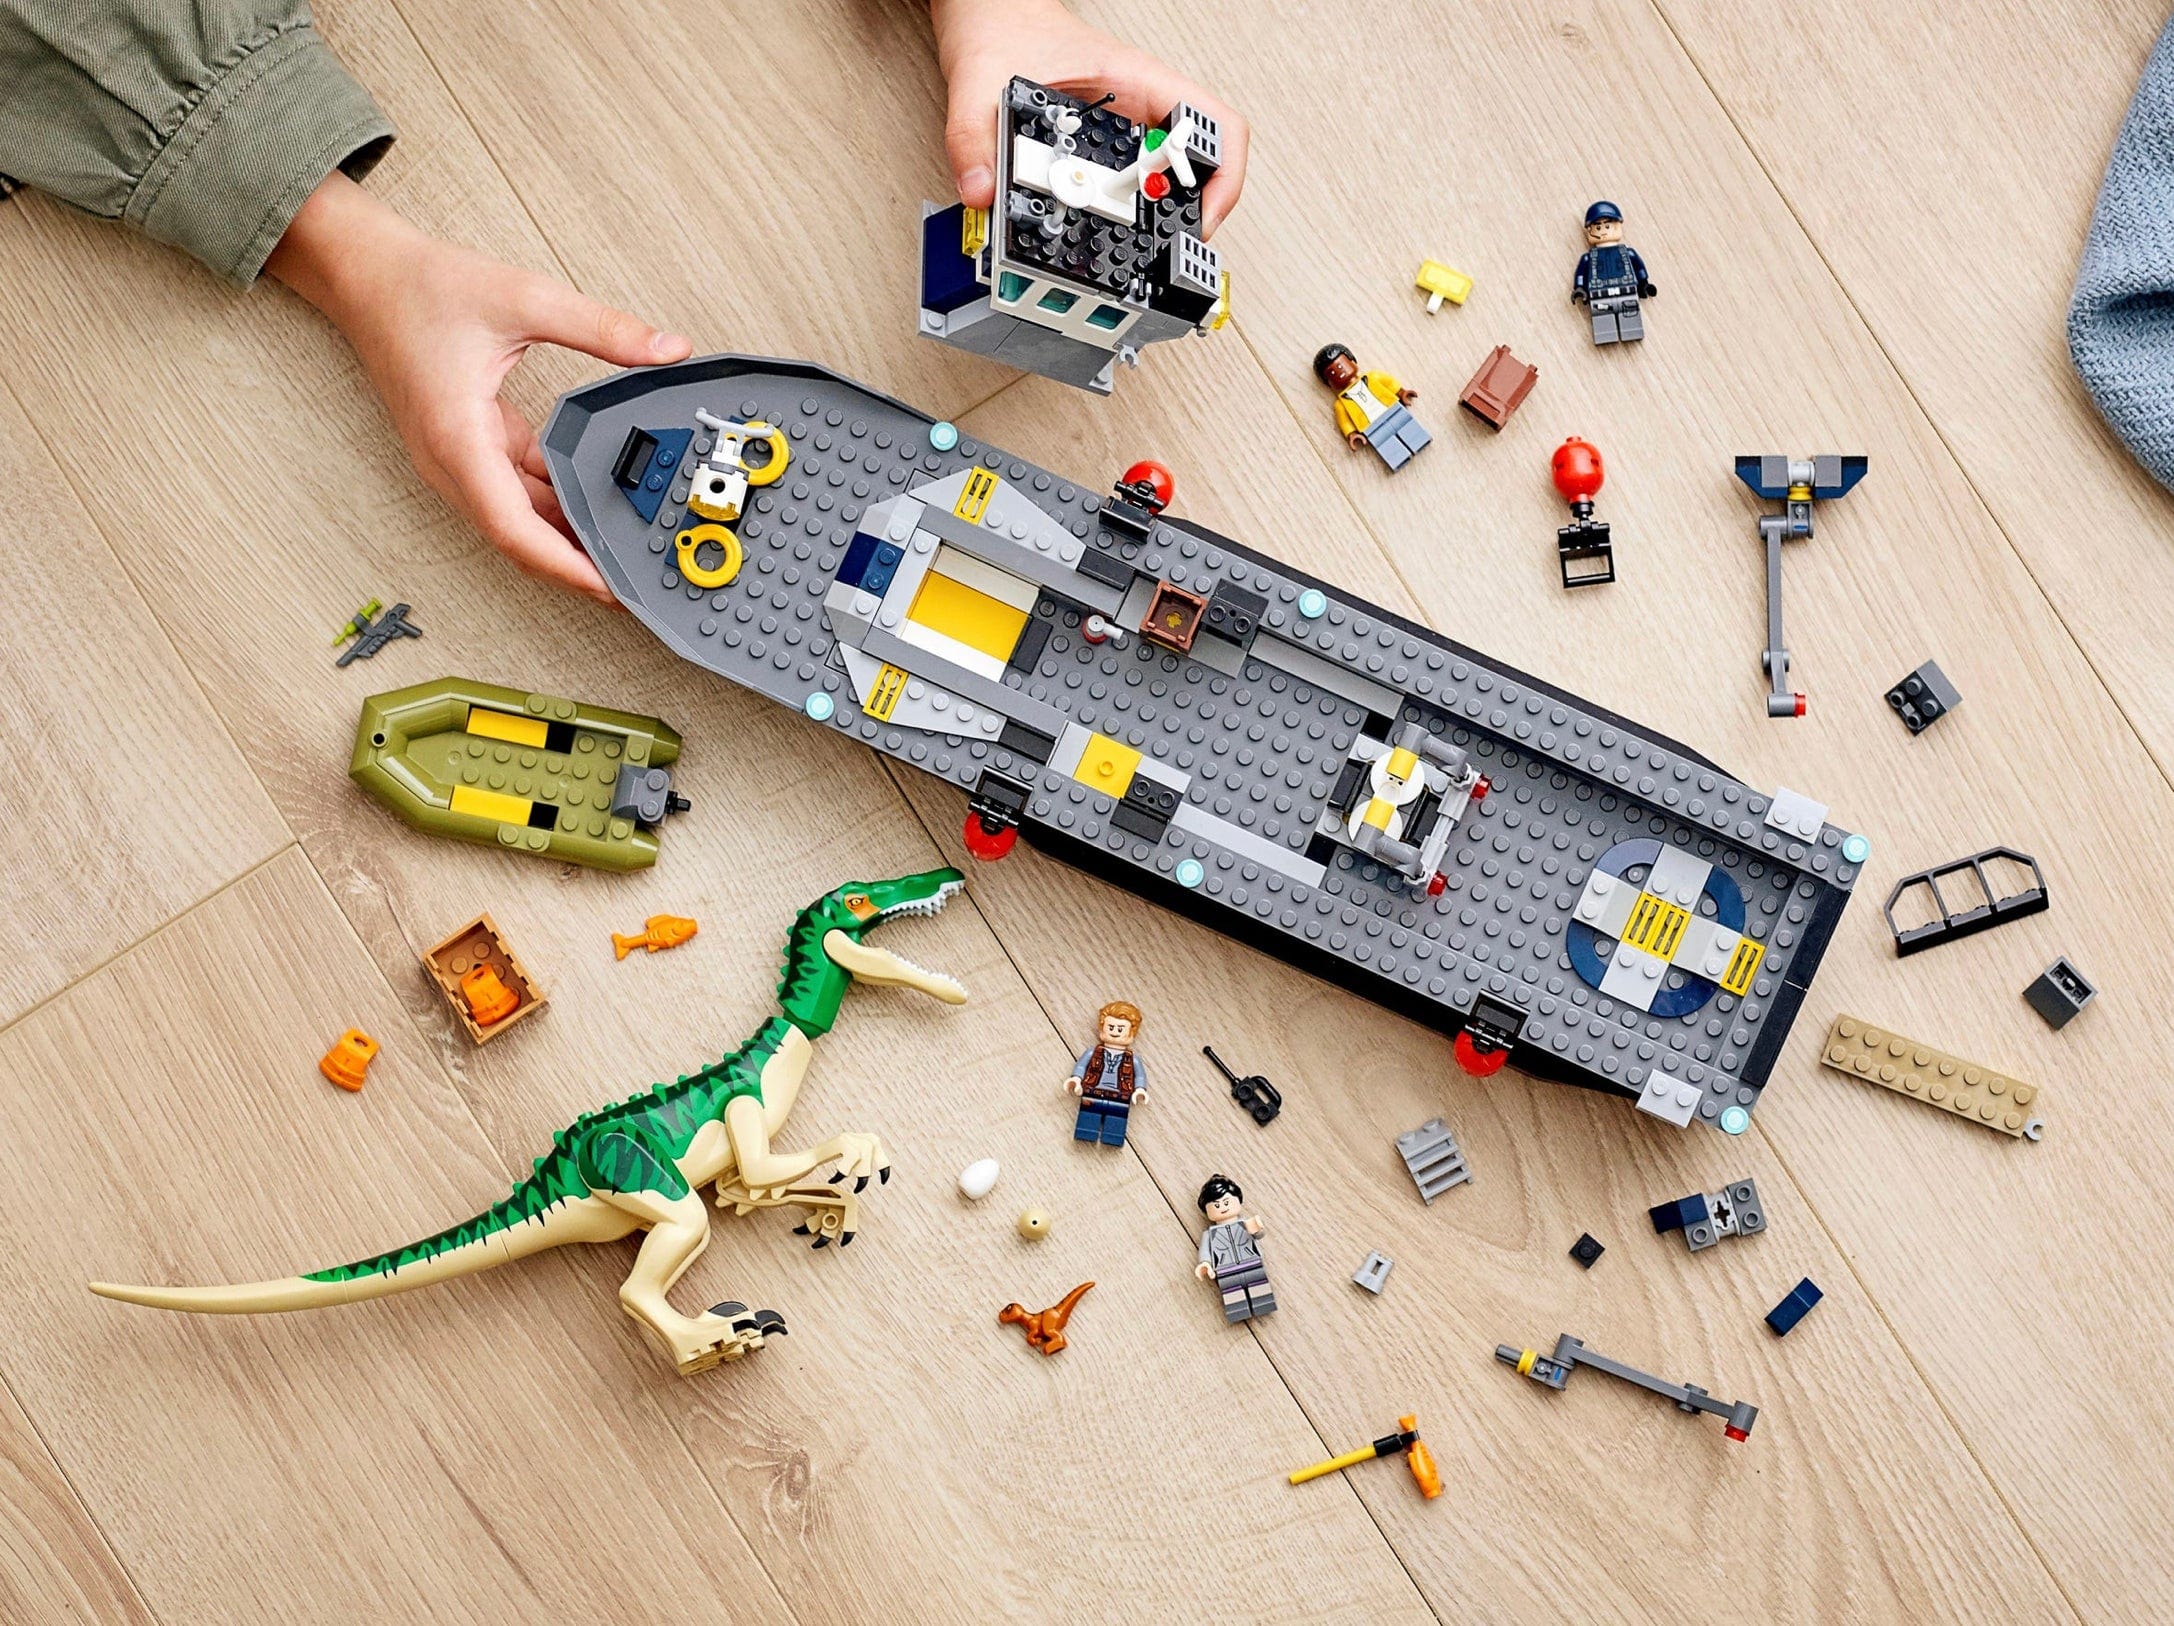 LEGO Baryonyx Dinosaur Boat Escape